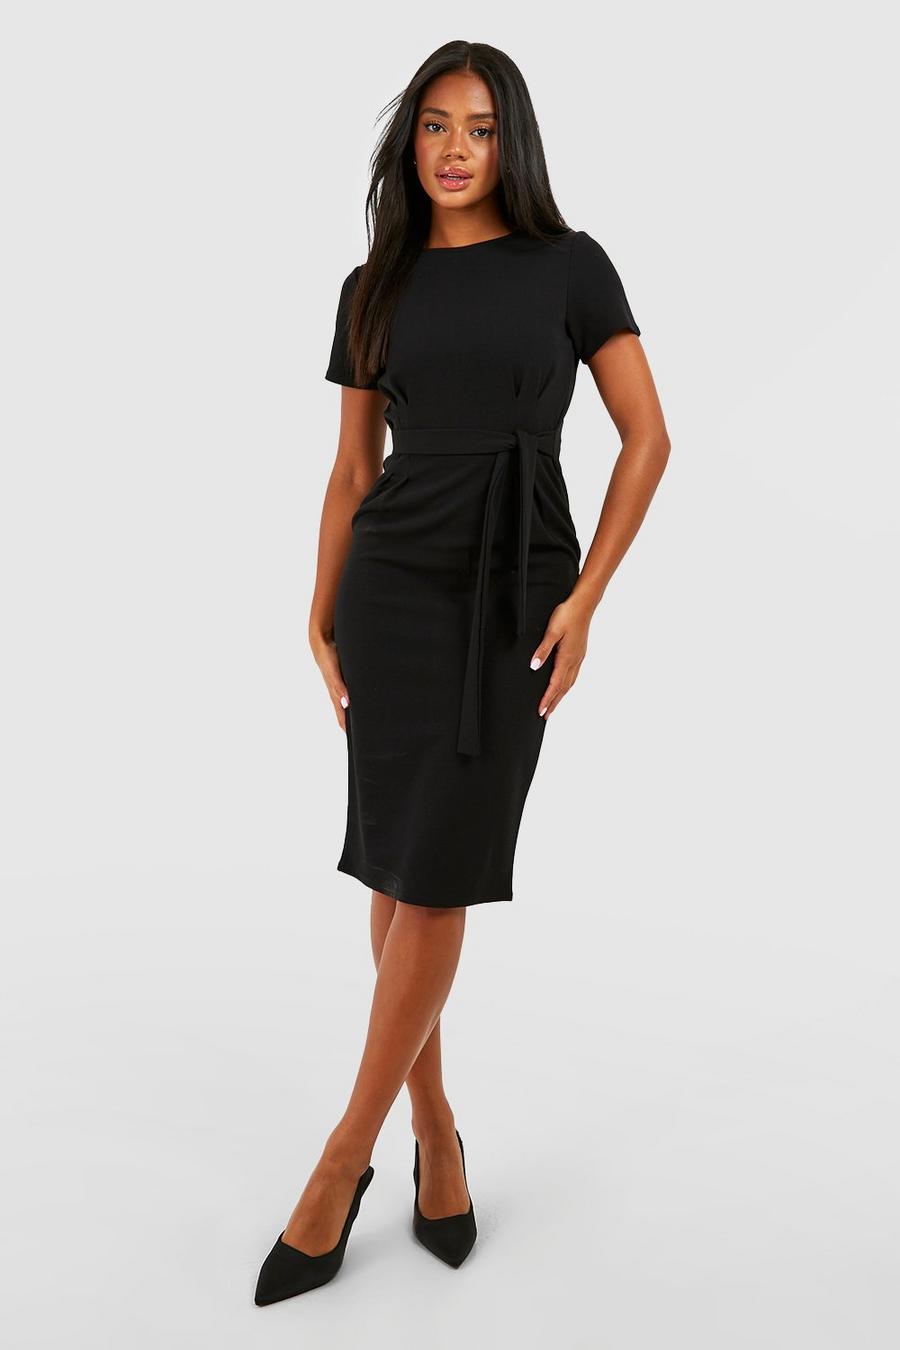 Black Midi Dresses, Black Mid-Length Dresses